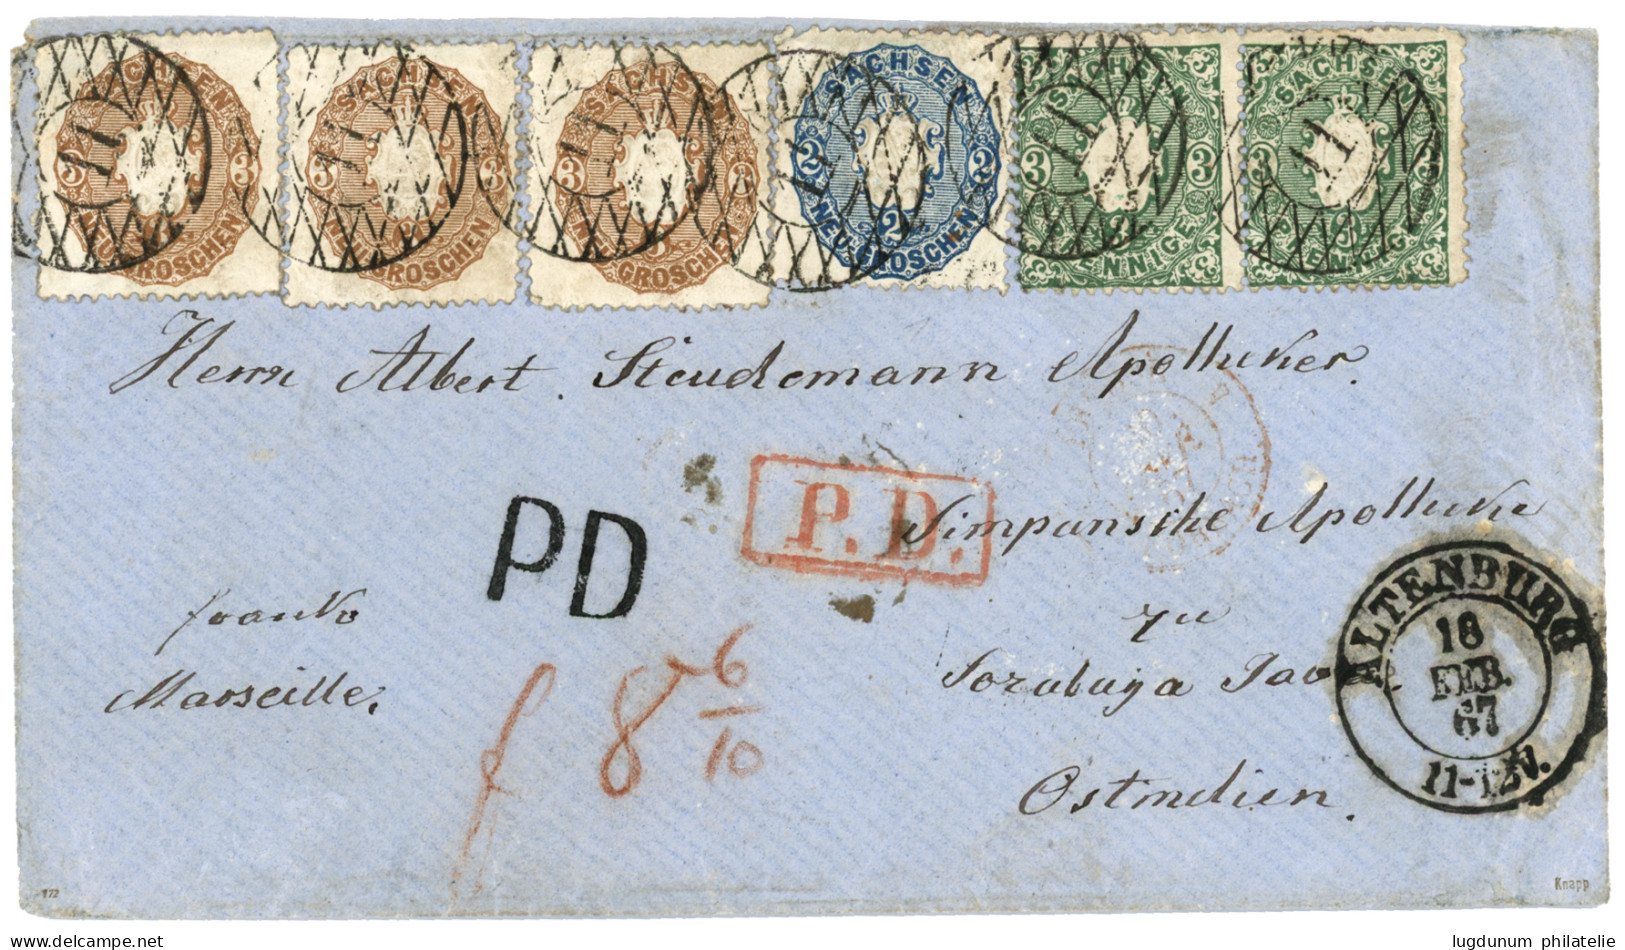 SAXONY - Destination NETHERLAND INDIES : 1867 2 Ngr + 3 Ngr (x3) + Pair 3pfg Canc. 11 + ALTENBURG On Envelope To SORABAY - Sachsen